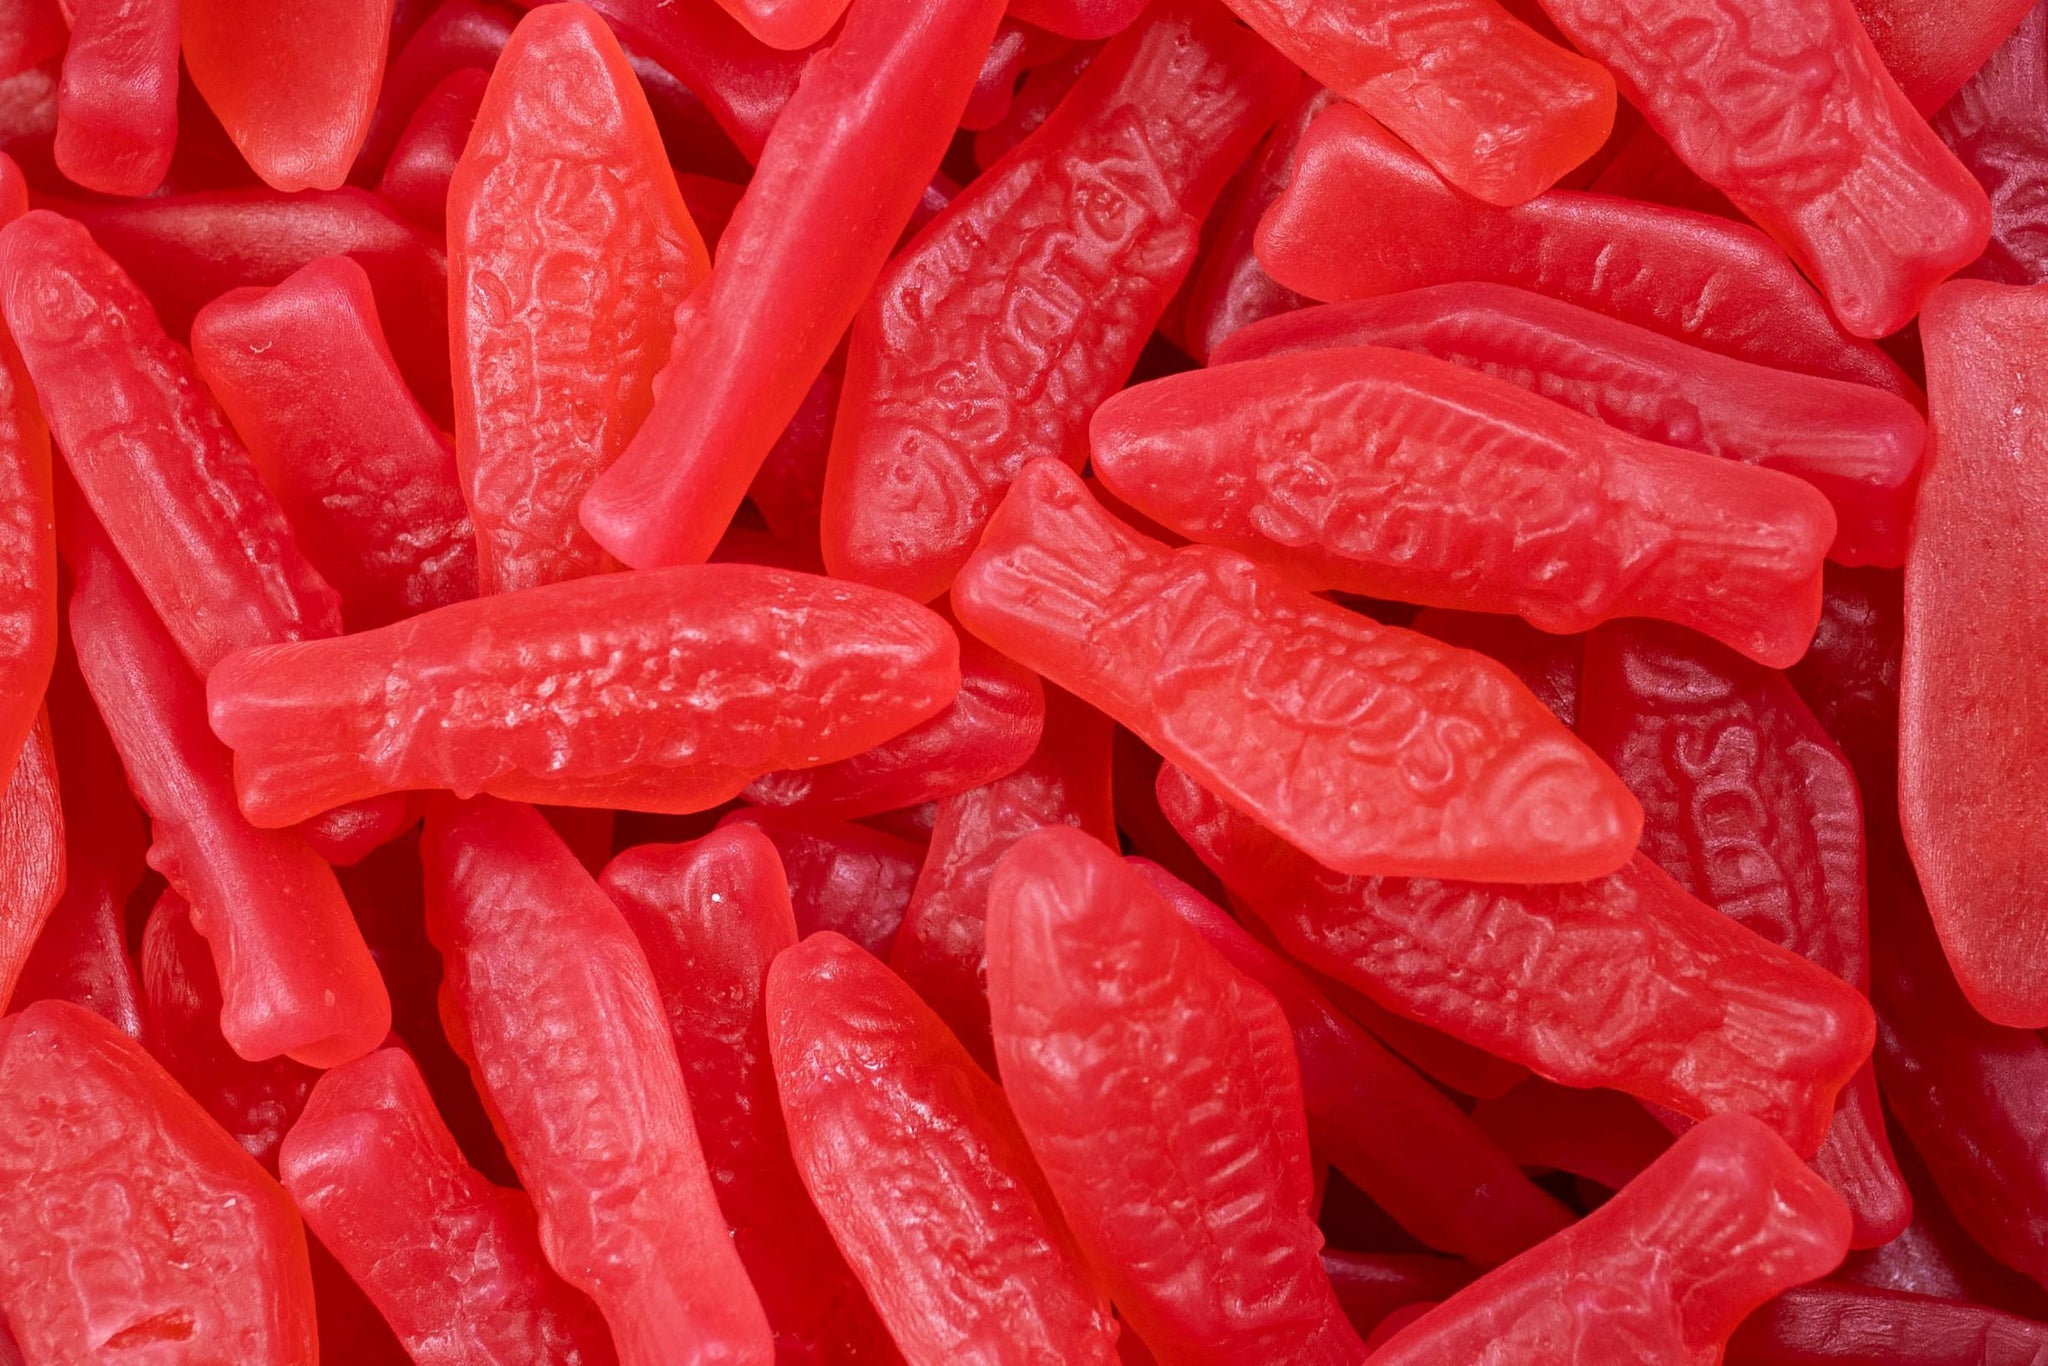 Scandy Röda Fiskar (Red Fish) Candy- A Swedish Candy Store